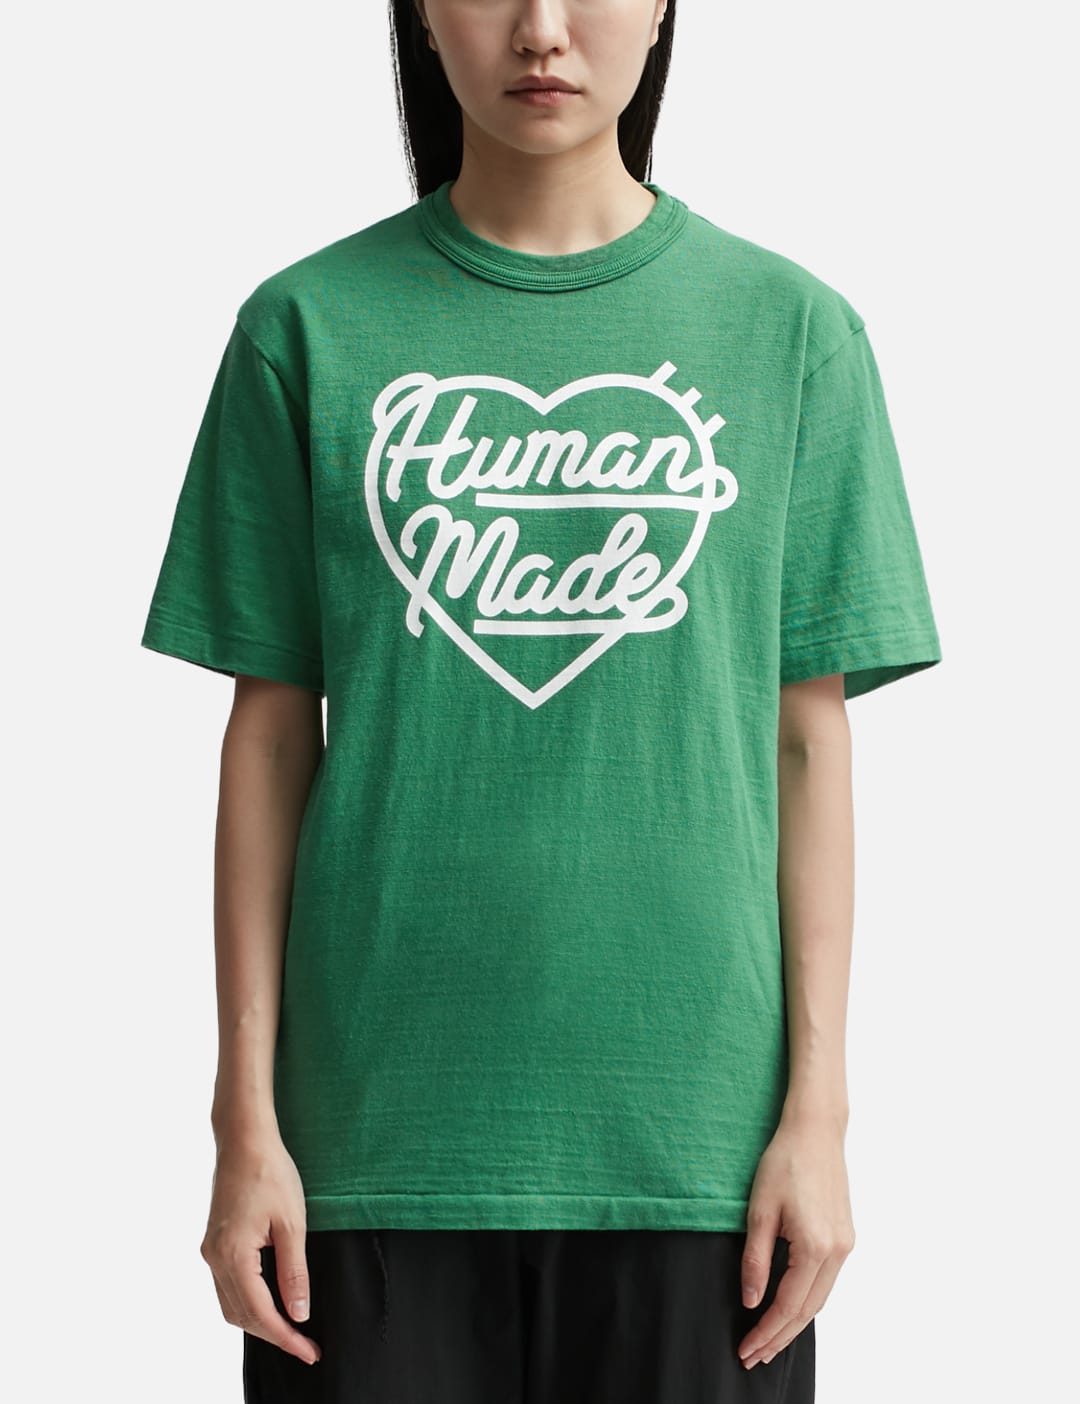 Human made shirt green | hartwellspremium.com